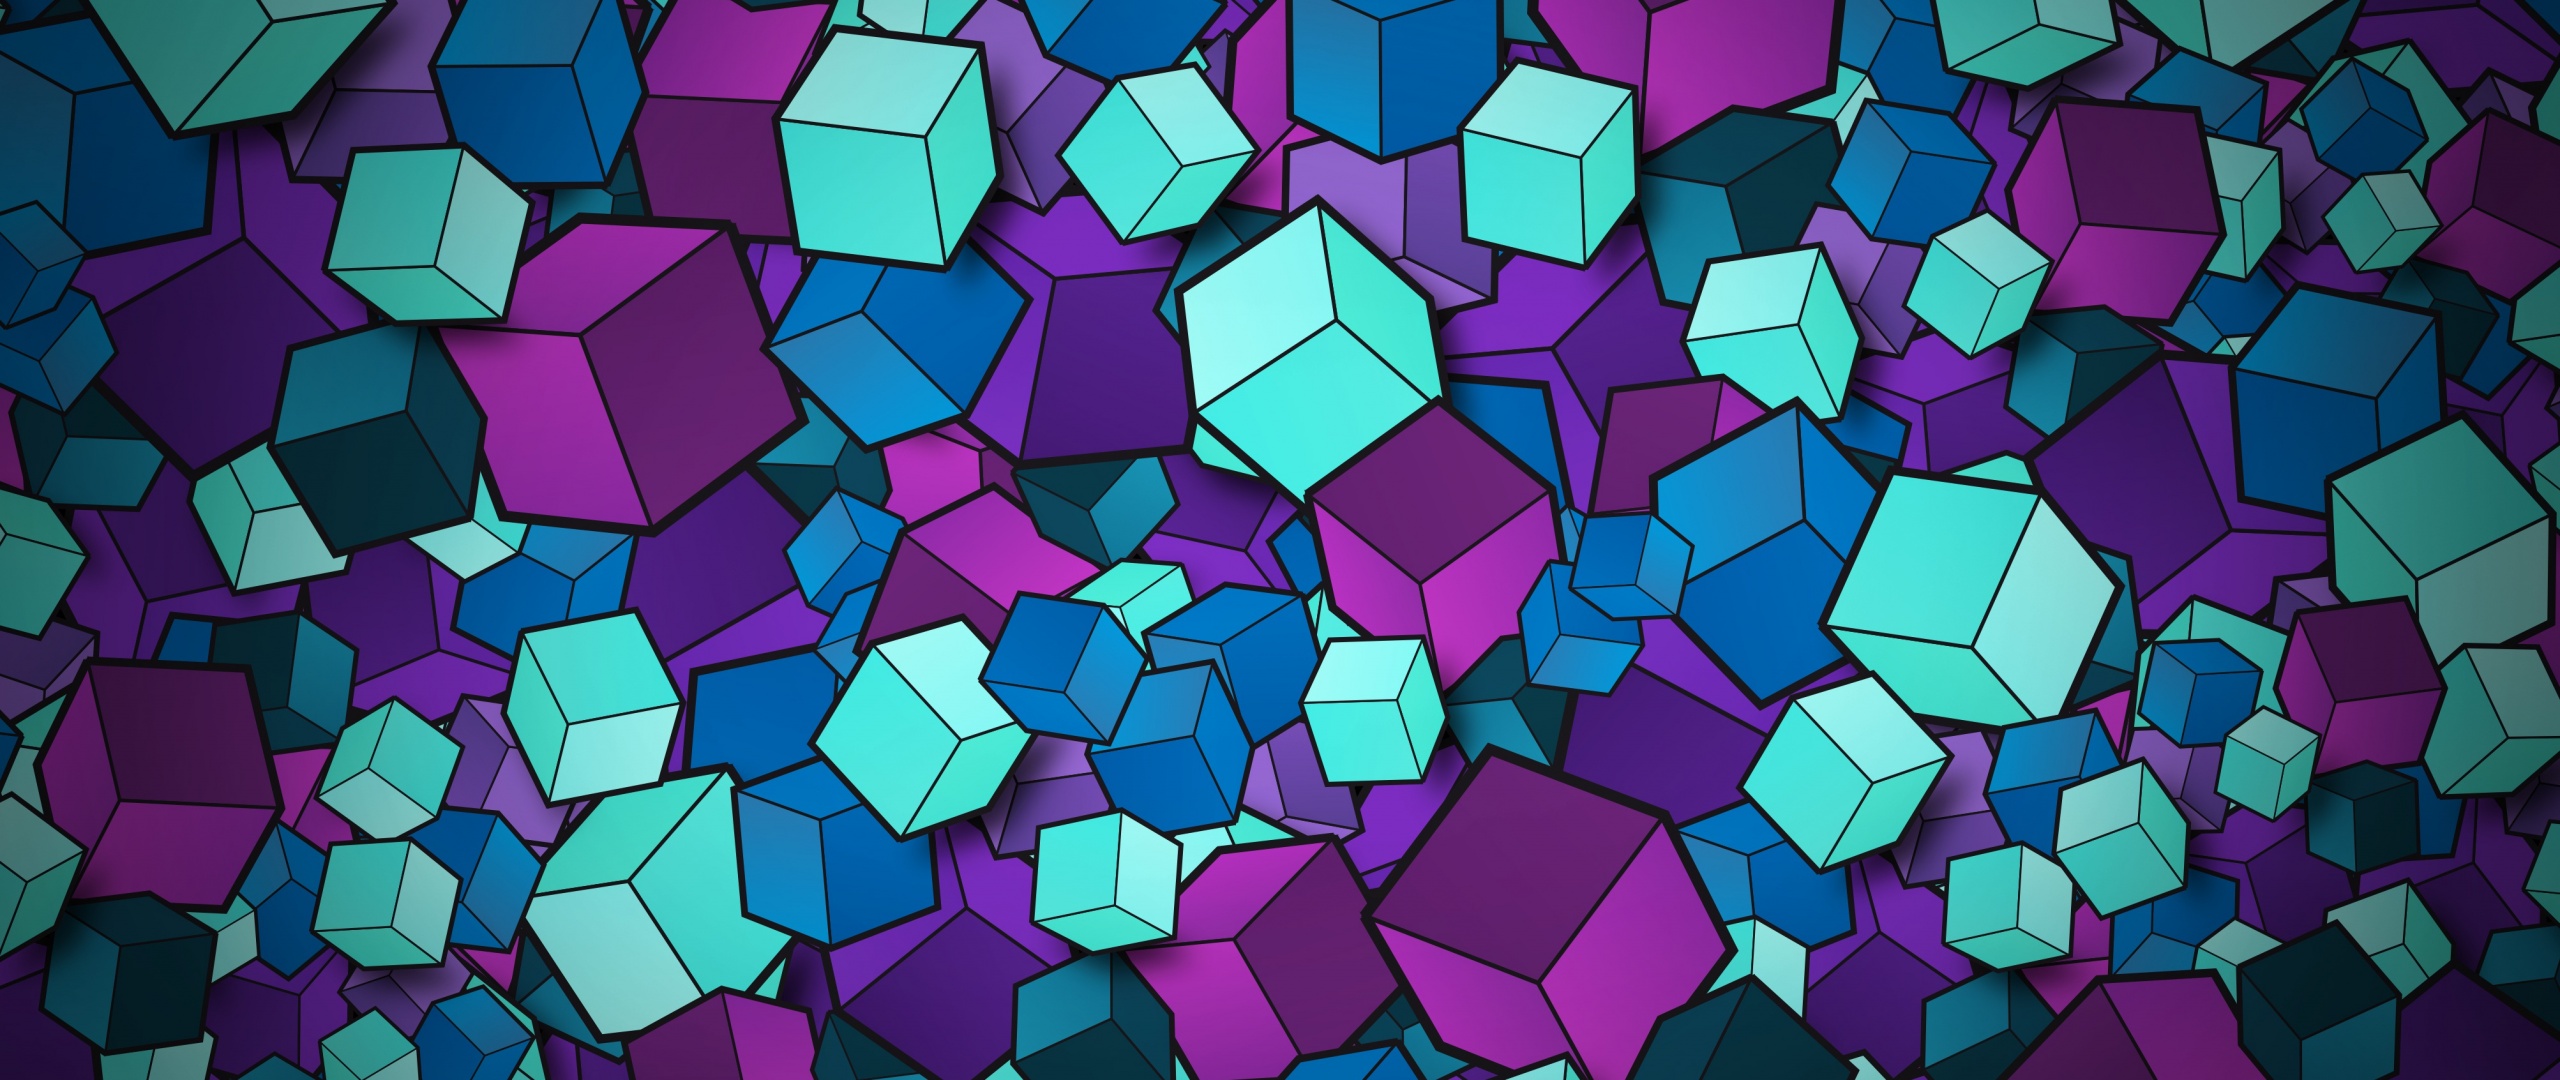 Wallpaper 4k Neon Cube Abstract Shapes Wallpaper